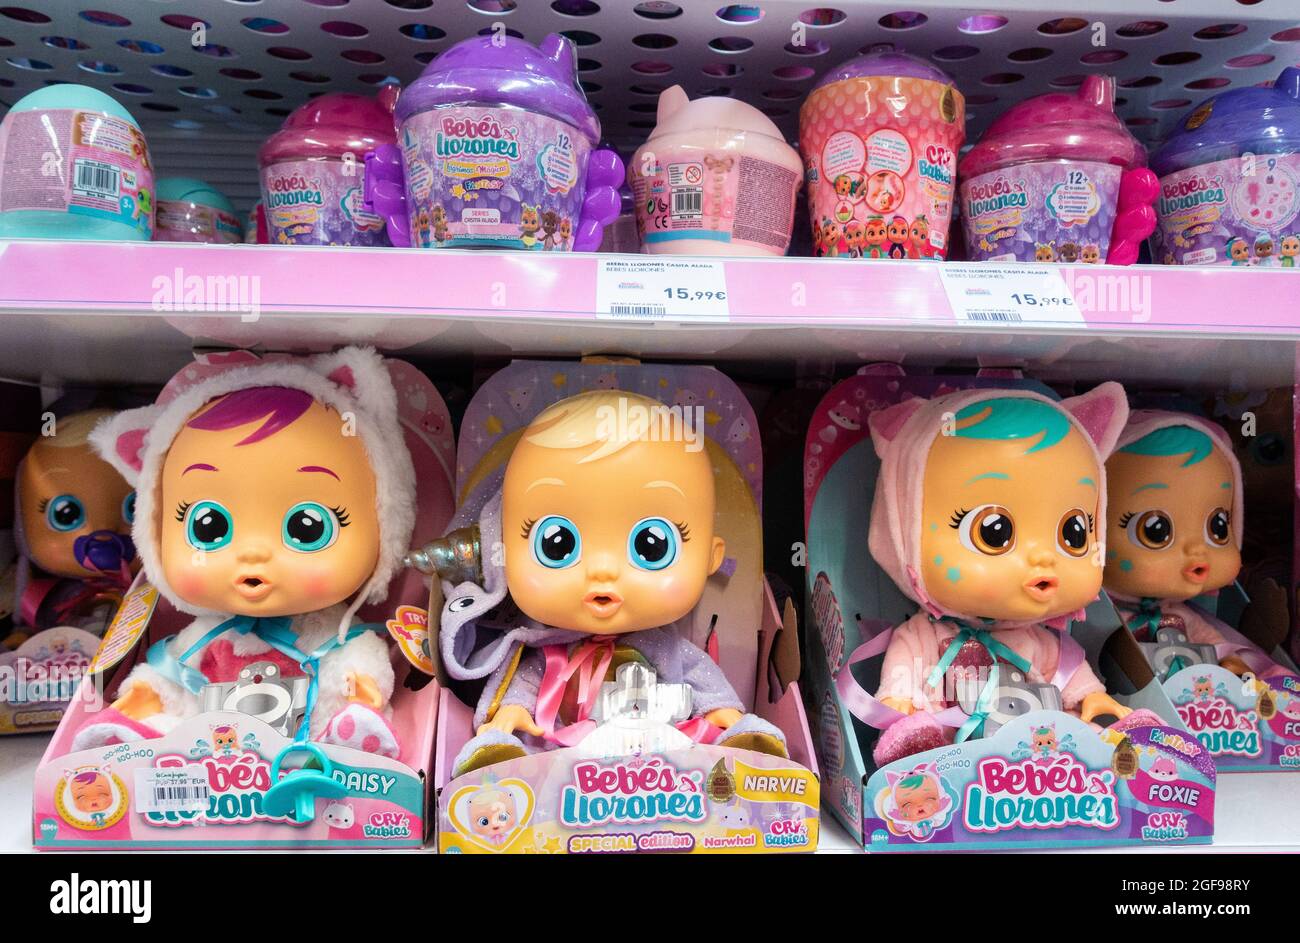 Cry Babies bebes llorones juguetes muñecas para niñas magic tears